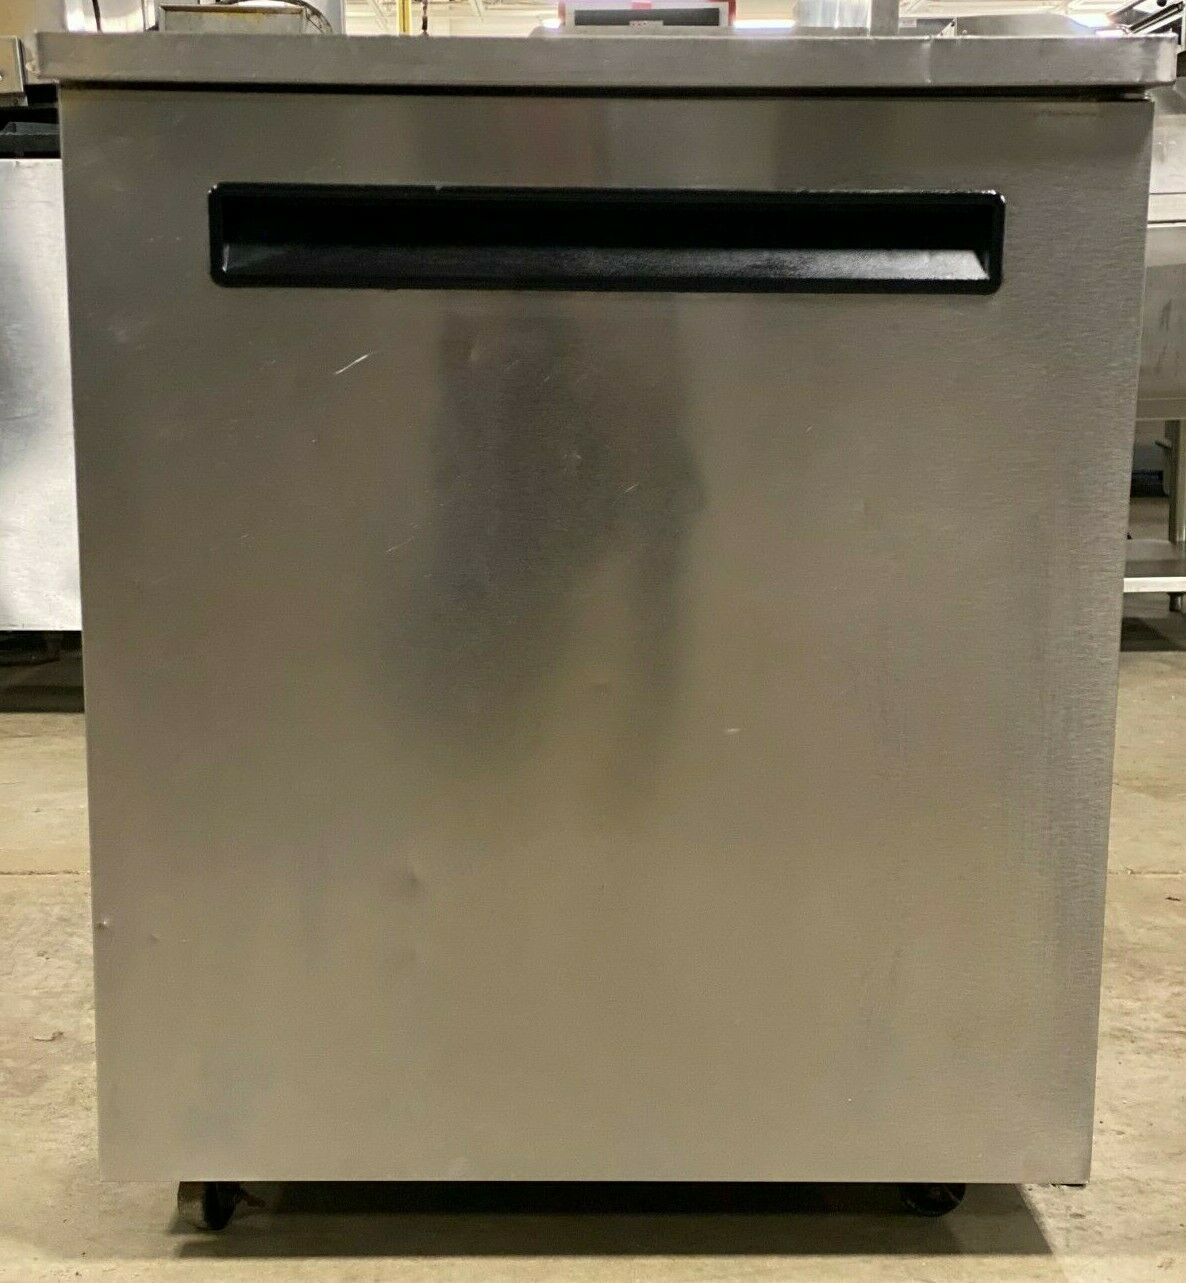 Delfield 406-star2 27" Single Door Undercounter Refrigerator